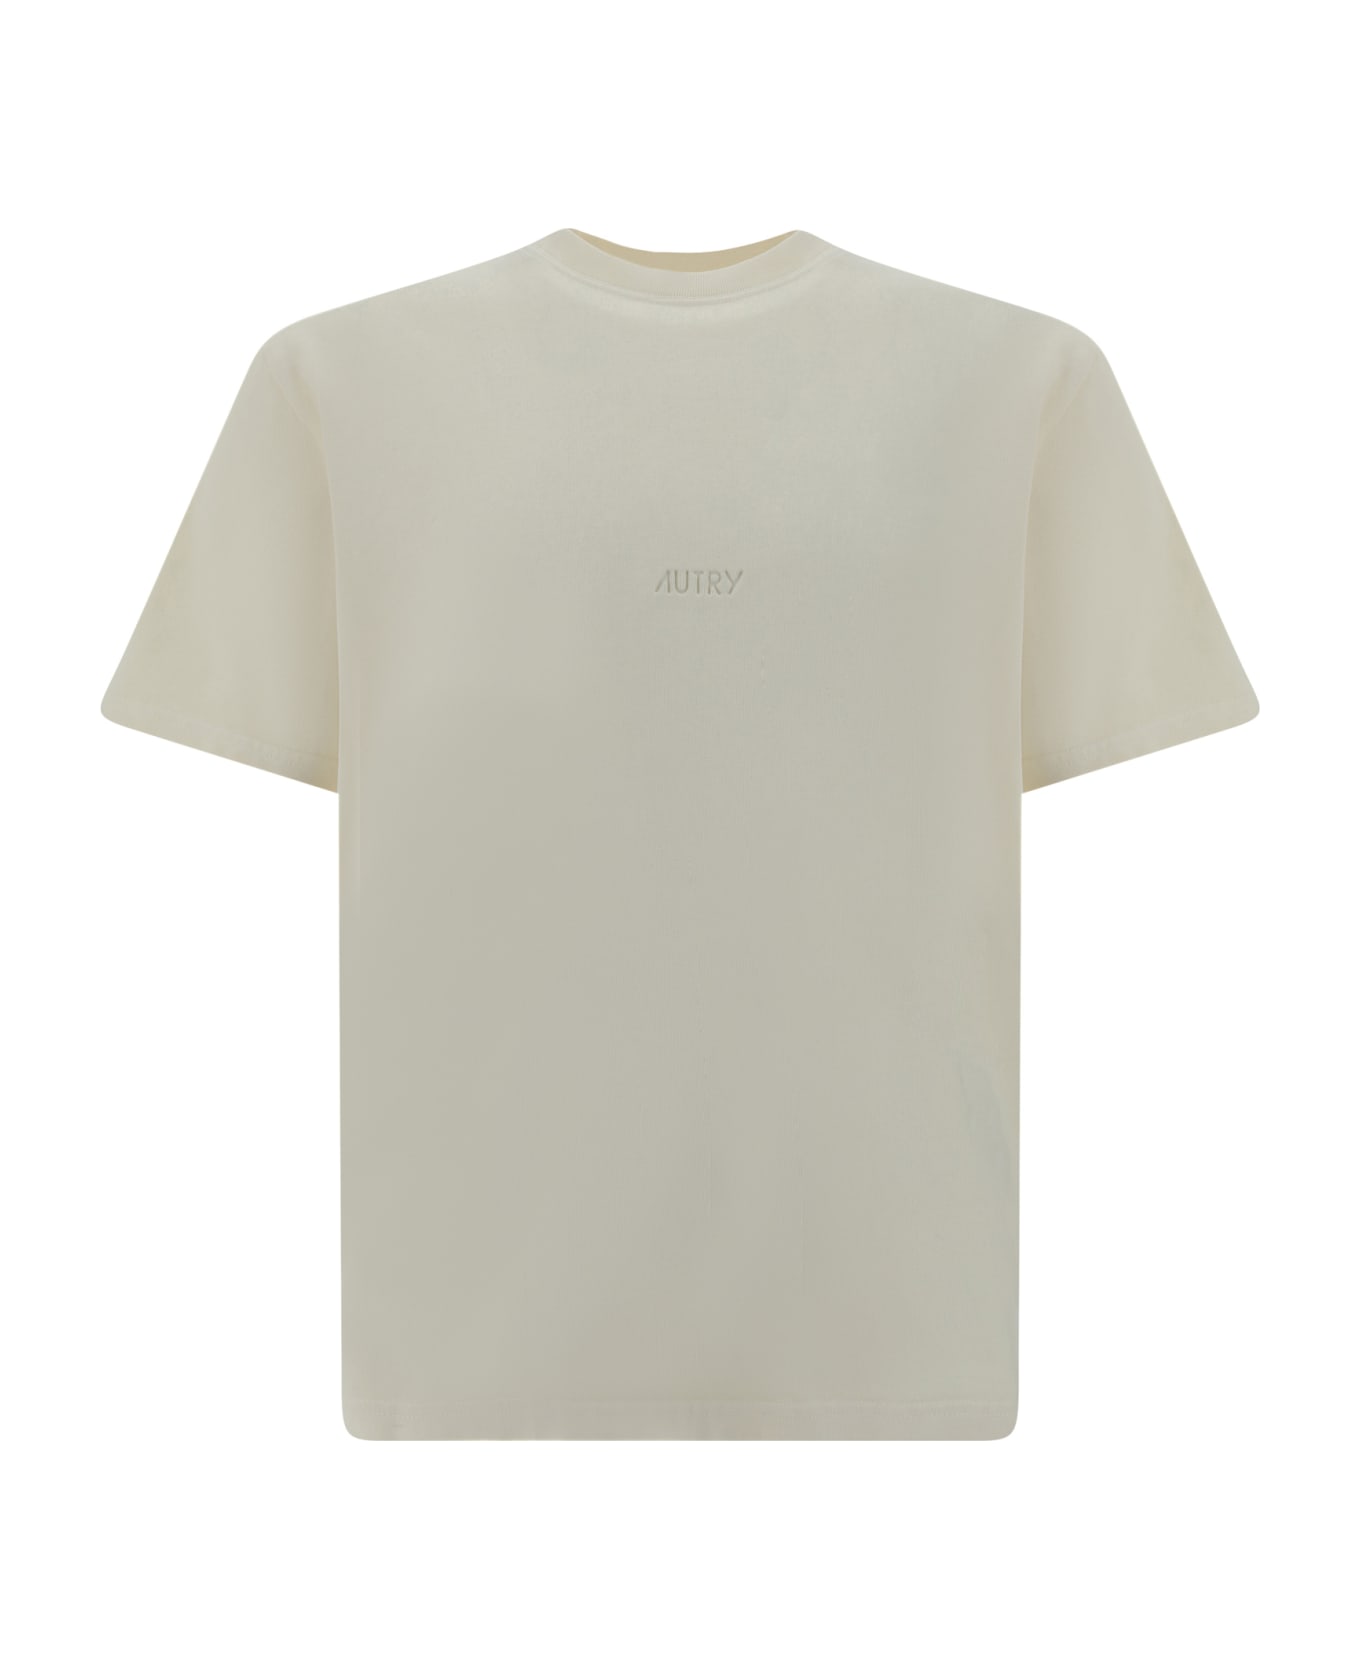 Autry T-shirt - Cream